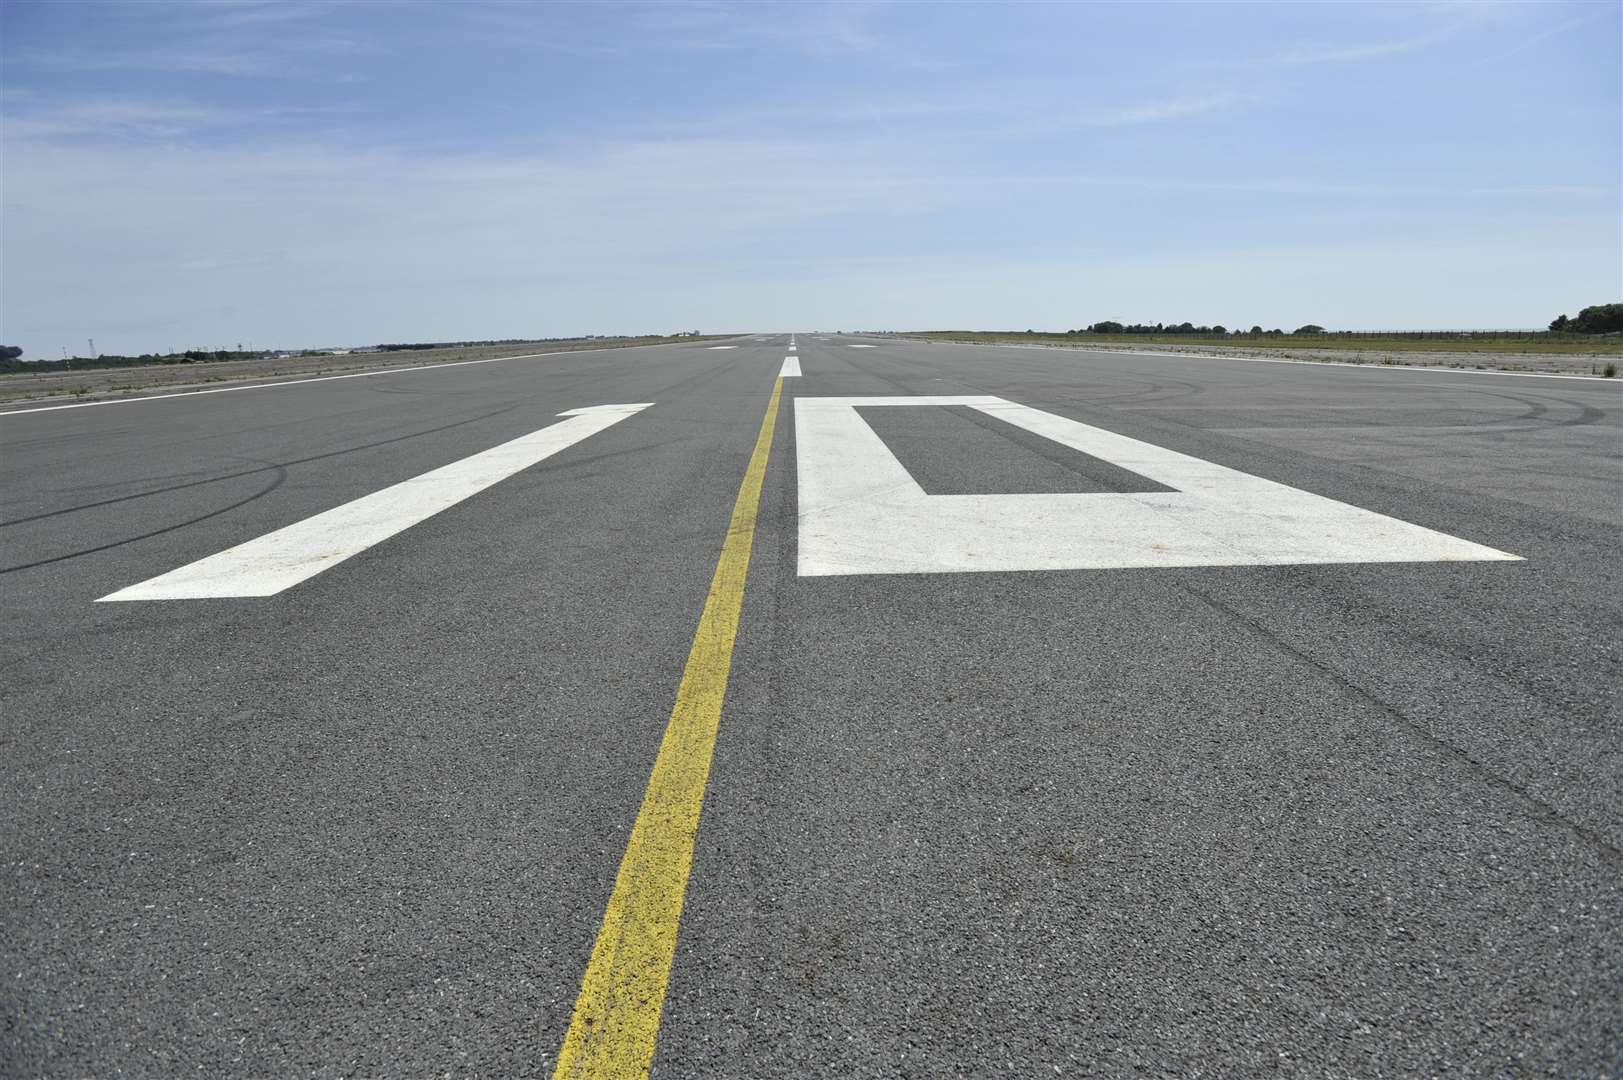 The runway at Manston Airport